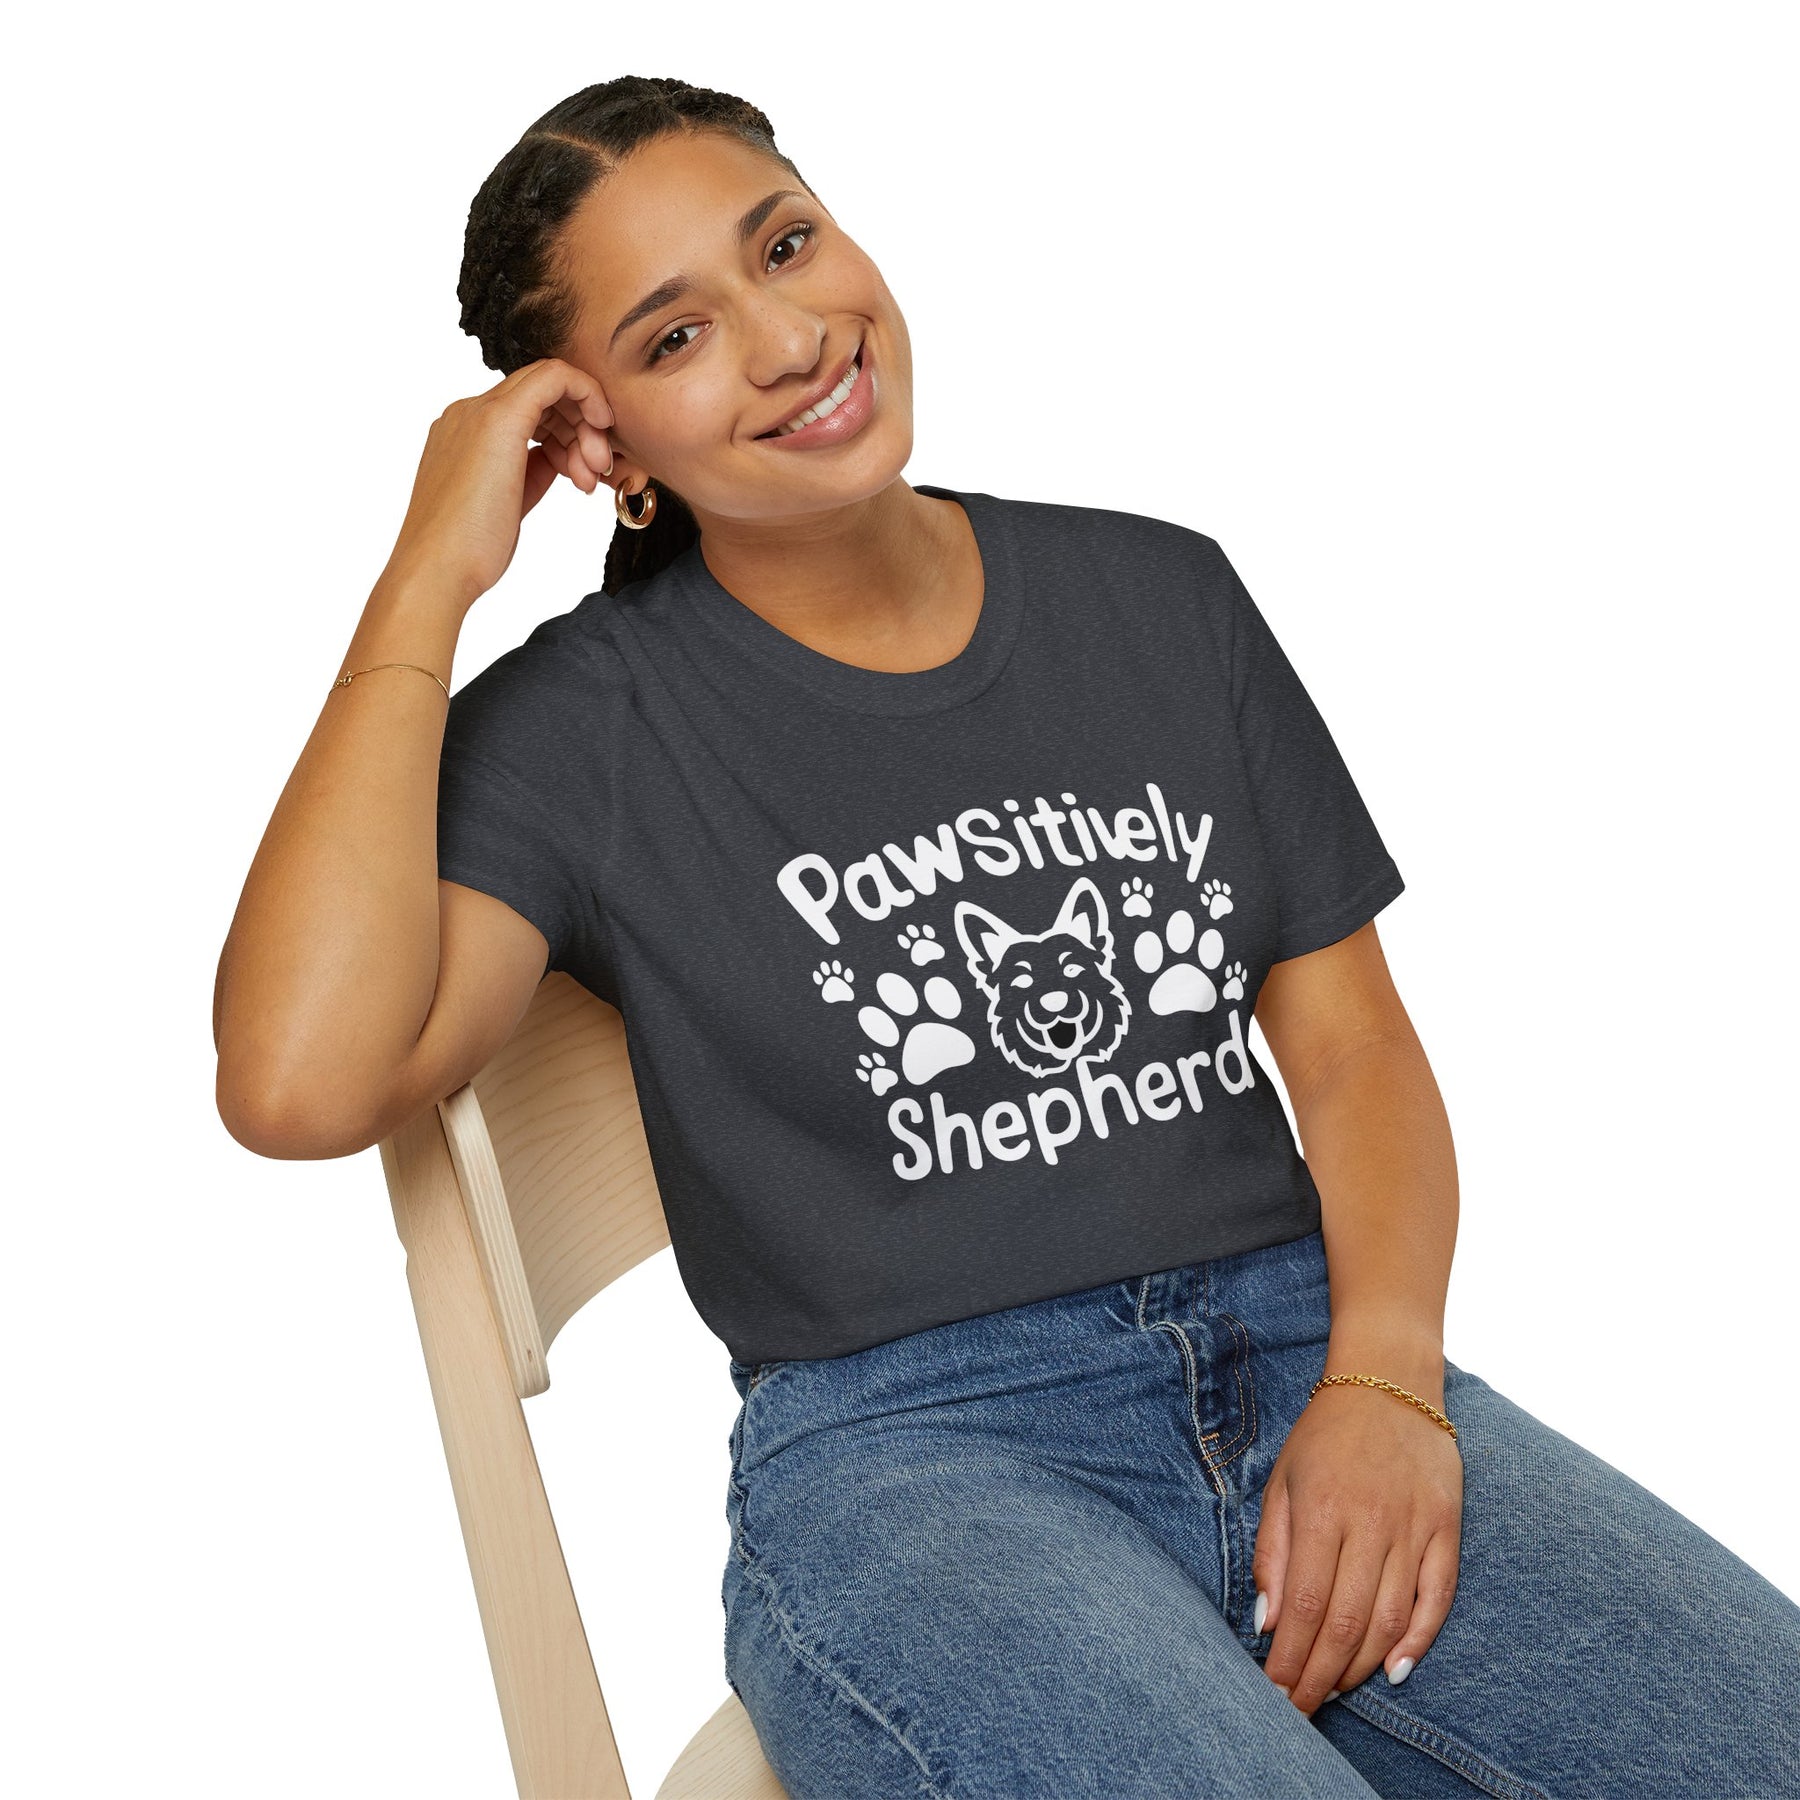 Pawsitively German Shepherd - German Shepherd Unisex T Shirts